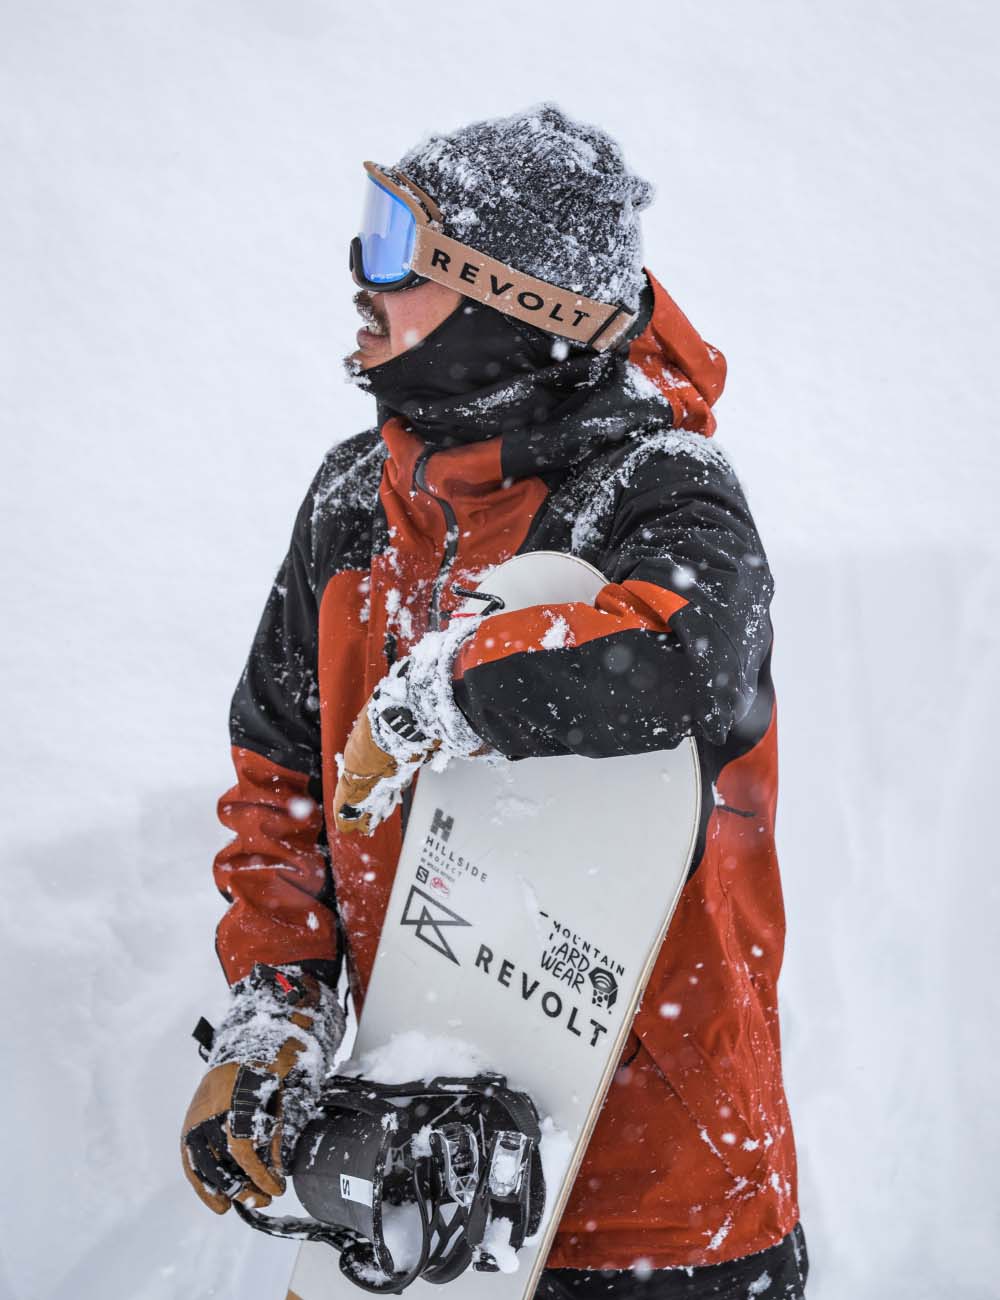 Black and white image of Keisuke Yoshida snowboarding.